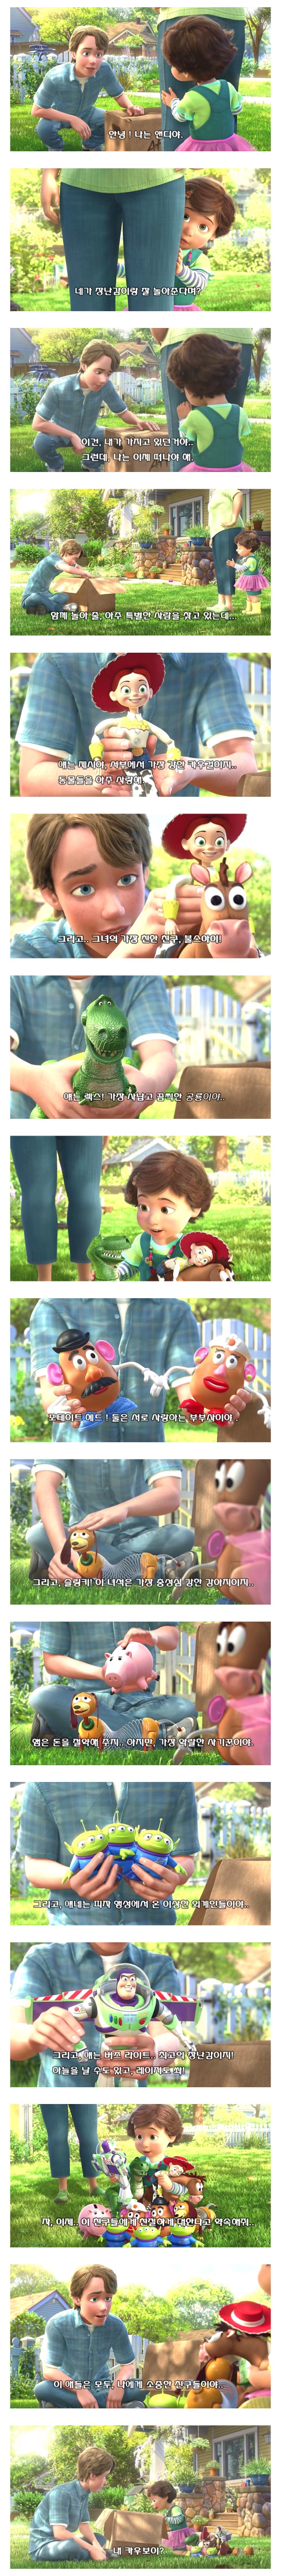 Toy Story's best scene.jpg